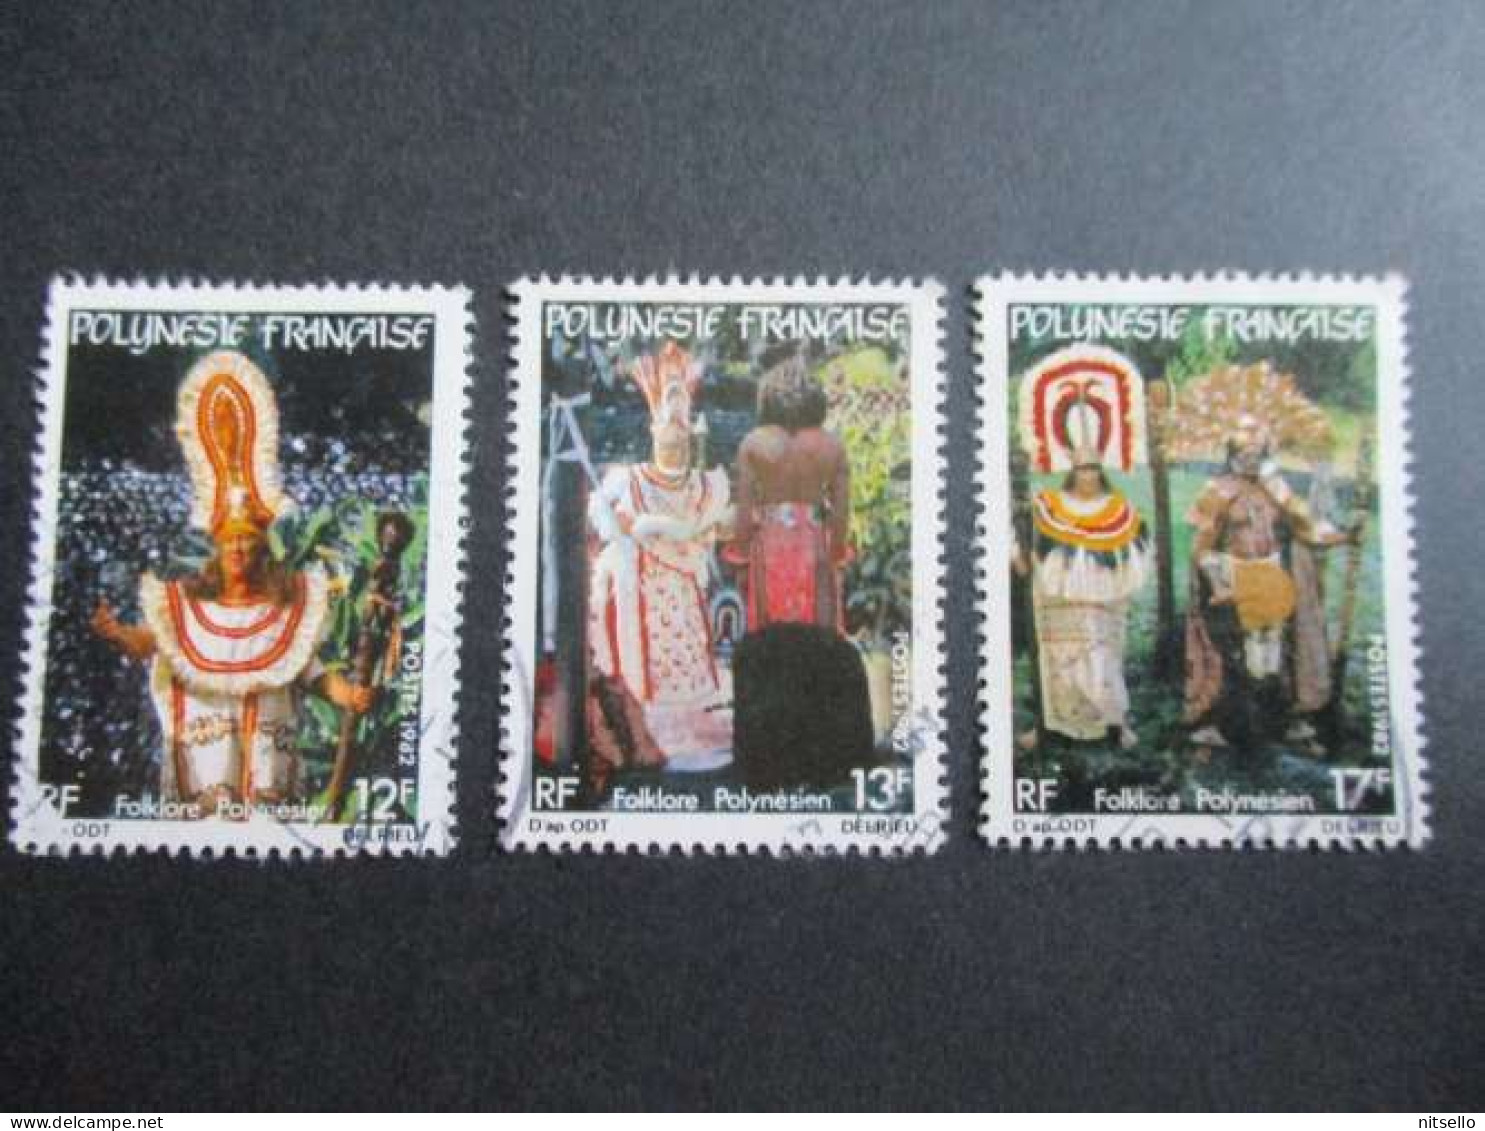 LOTE 2202A ///  (C030)  POLINESIA FRANCESA  - YVERT Nº:  181/183 OBL 1982 ¡¡¡ OFERTA - LIQUIDATION - JE LIQUIDE !!! - Used Stamps